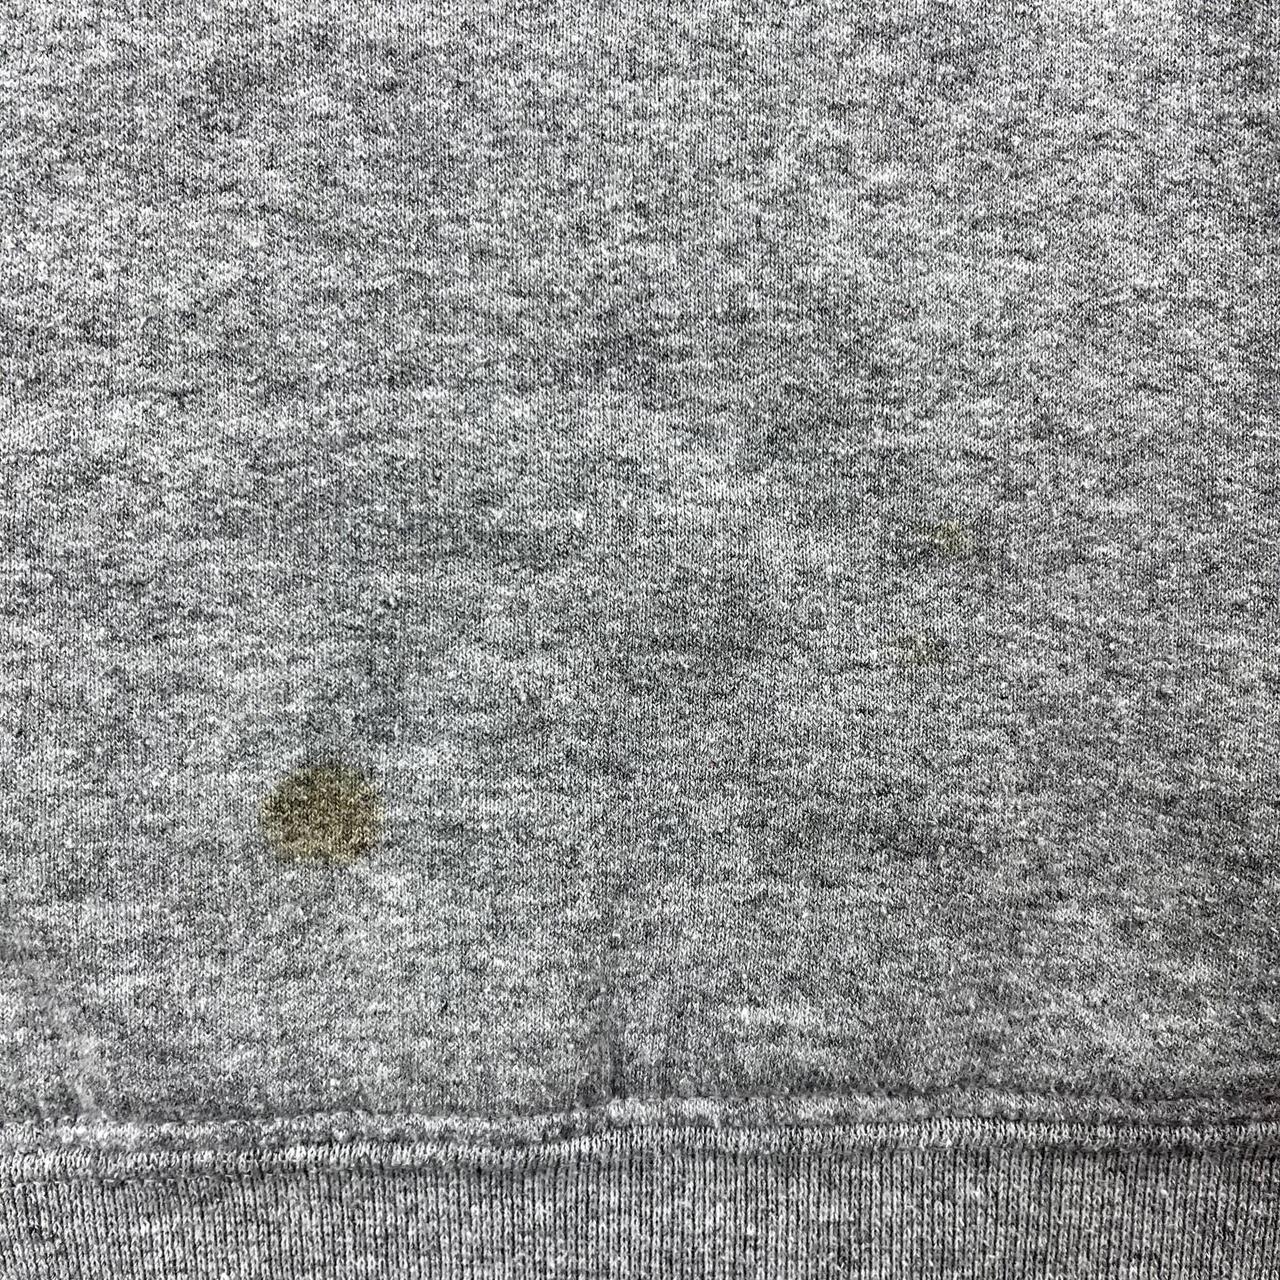 UC Davis Hoodie Sweatshirt Adult Medium Gray Aggies... - Depop